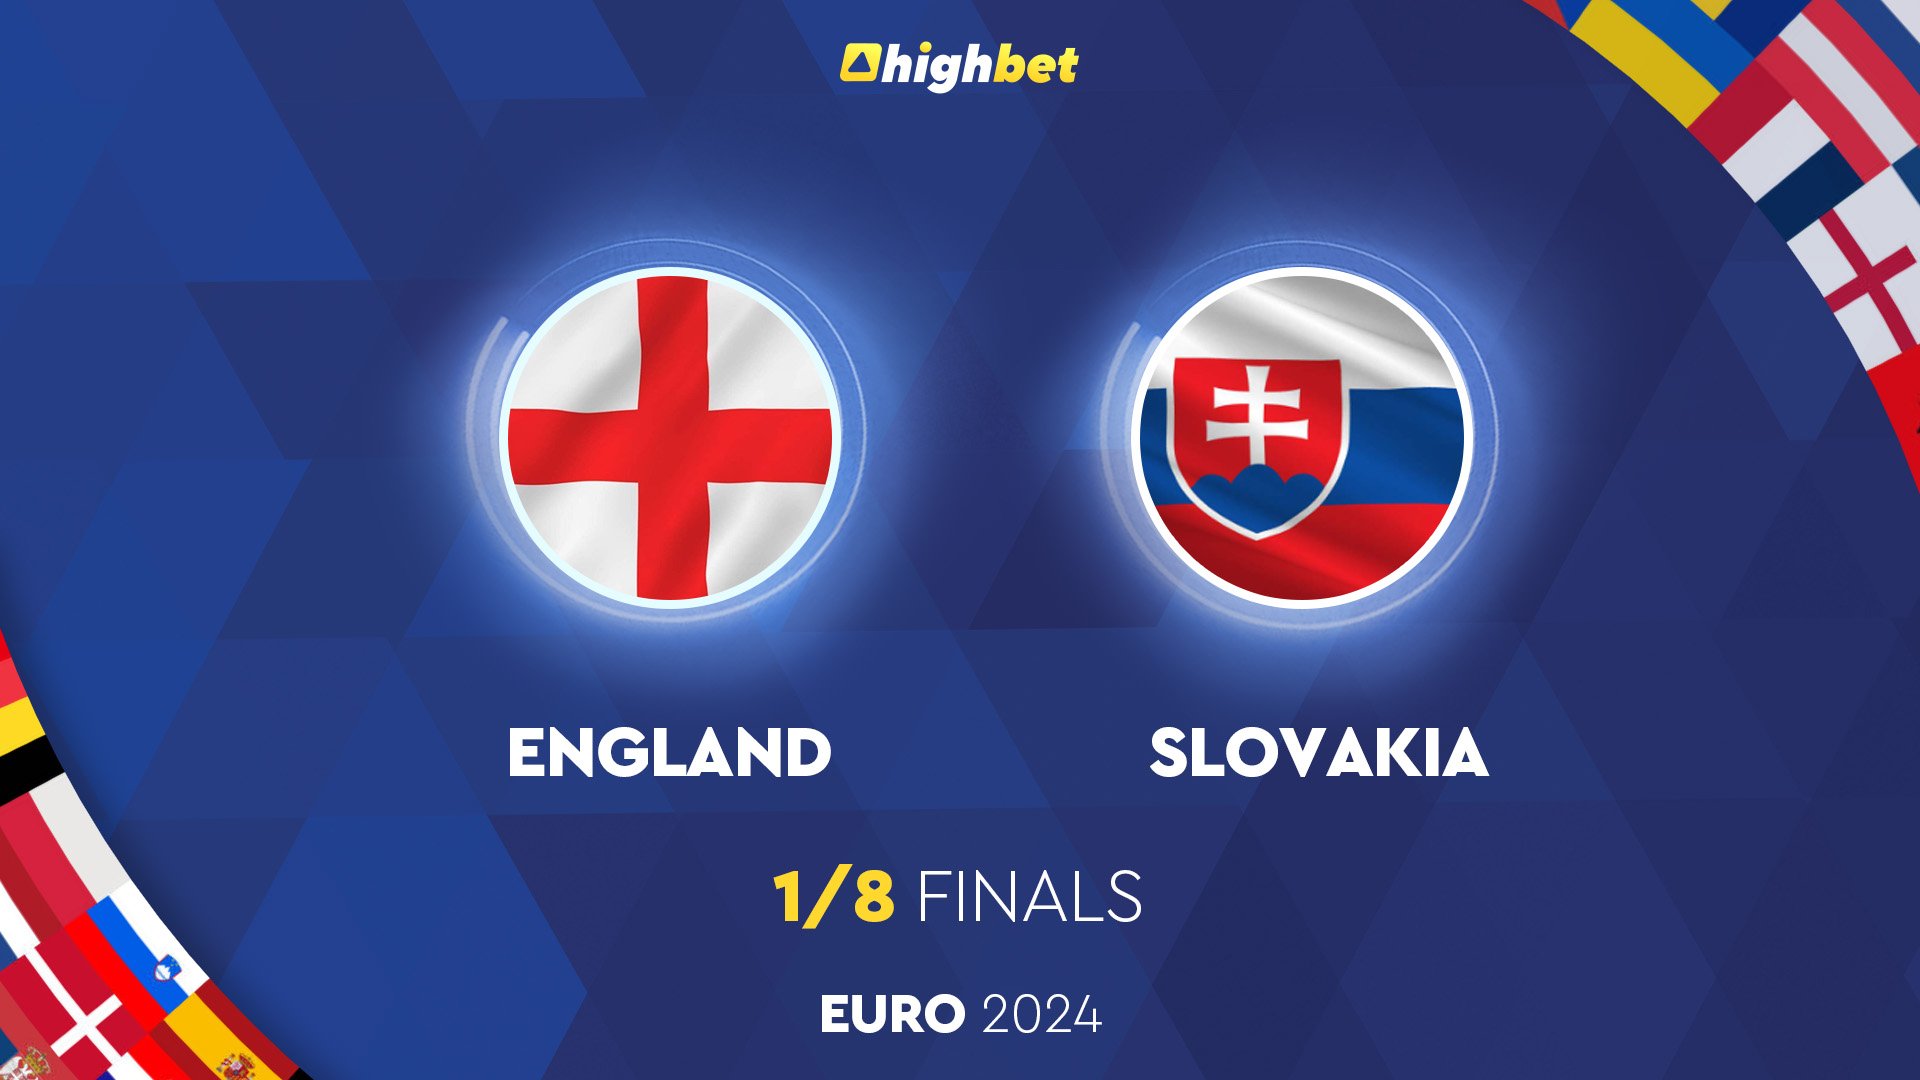 England vs Slovakia - Euro 2024 - HighBet Blog